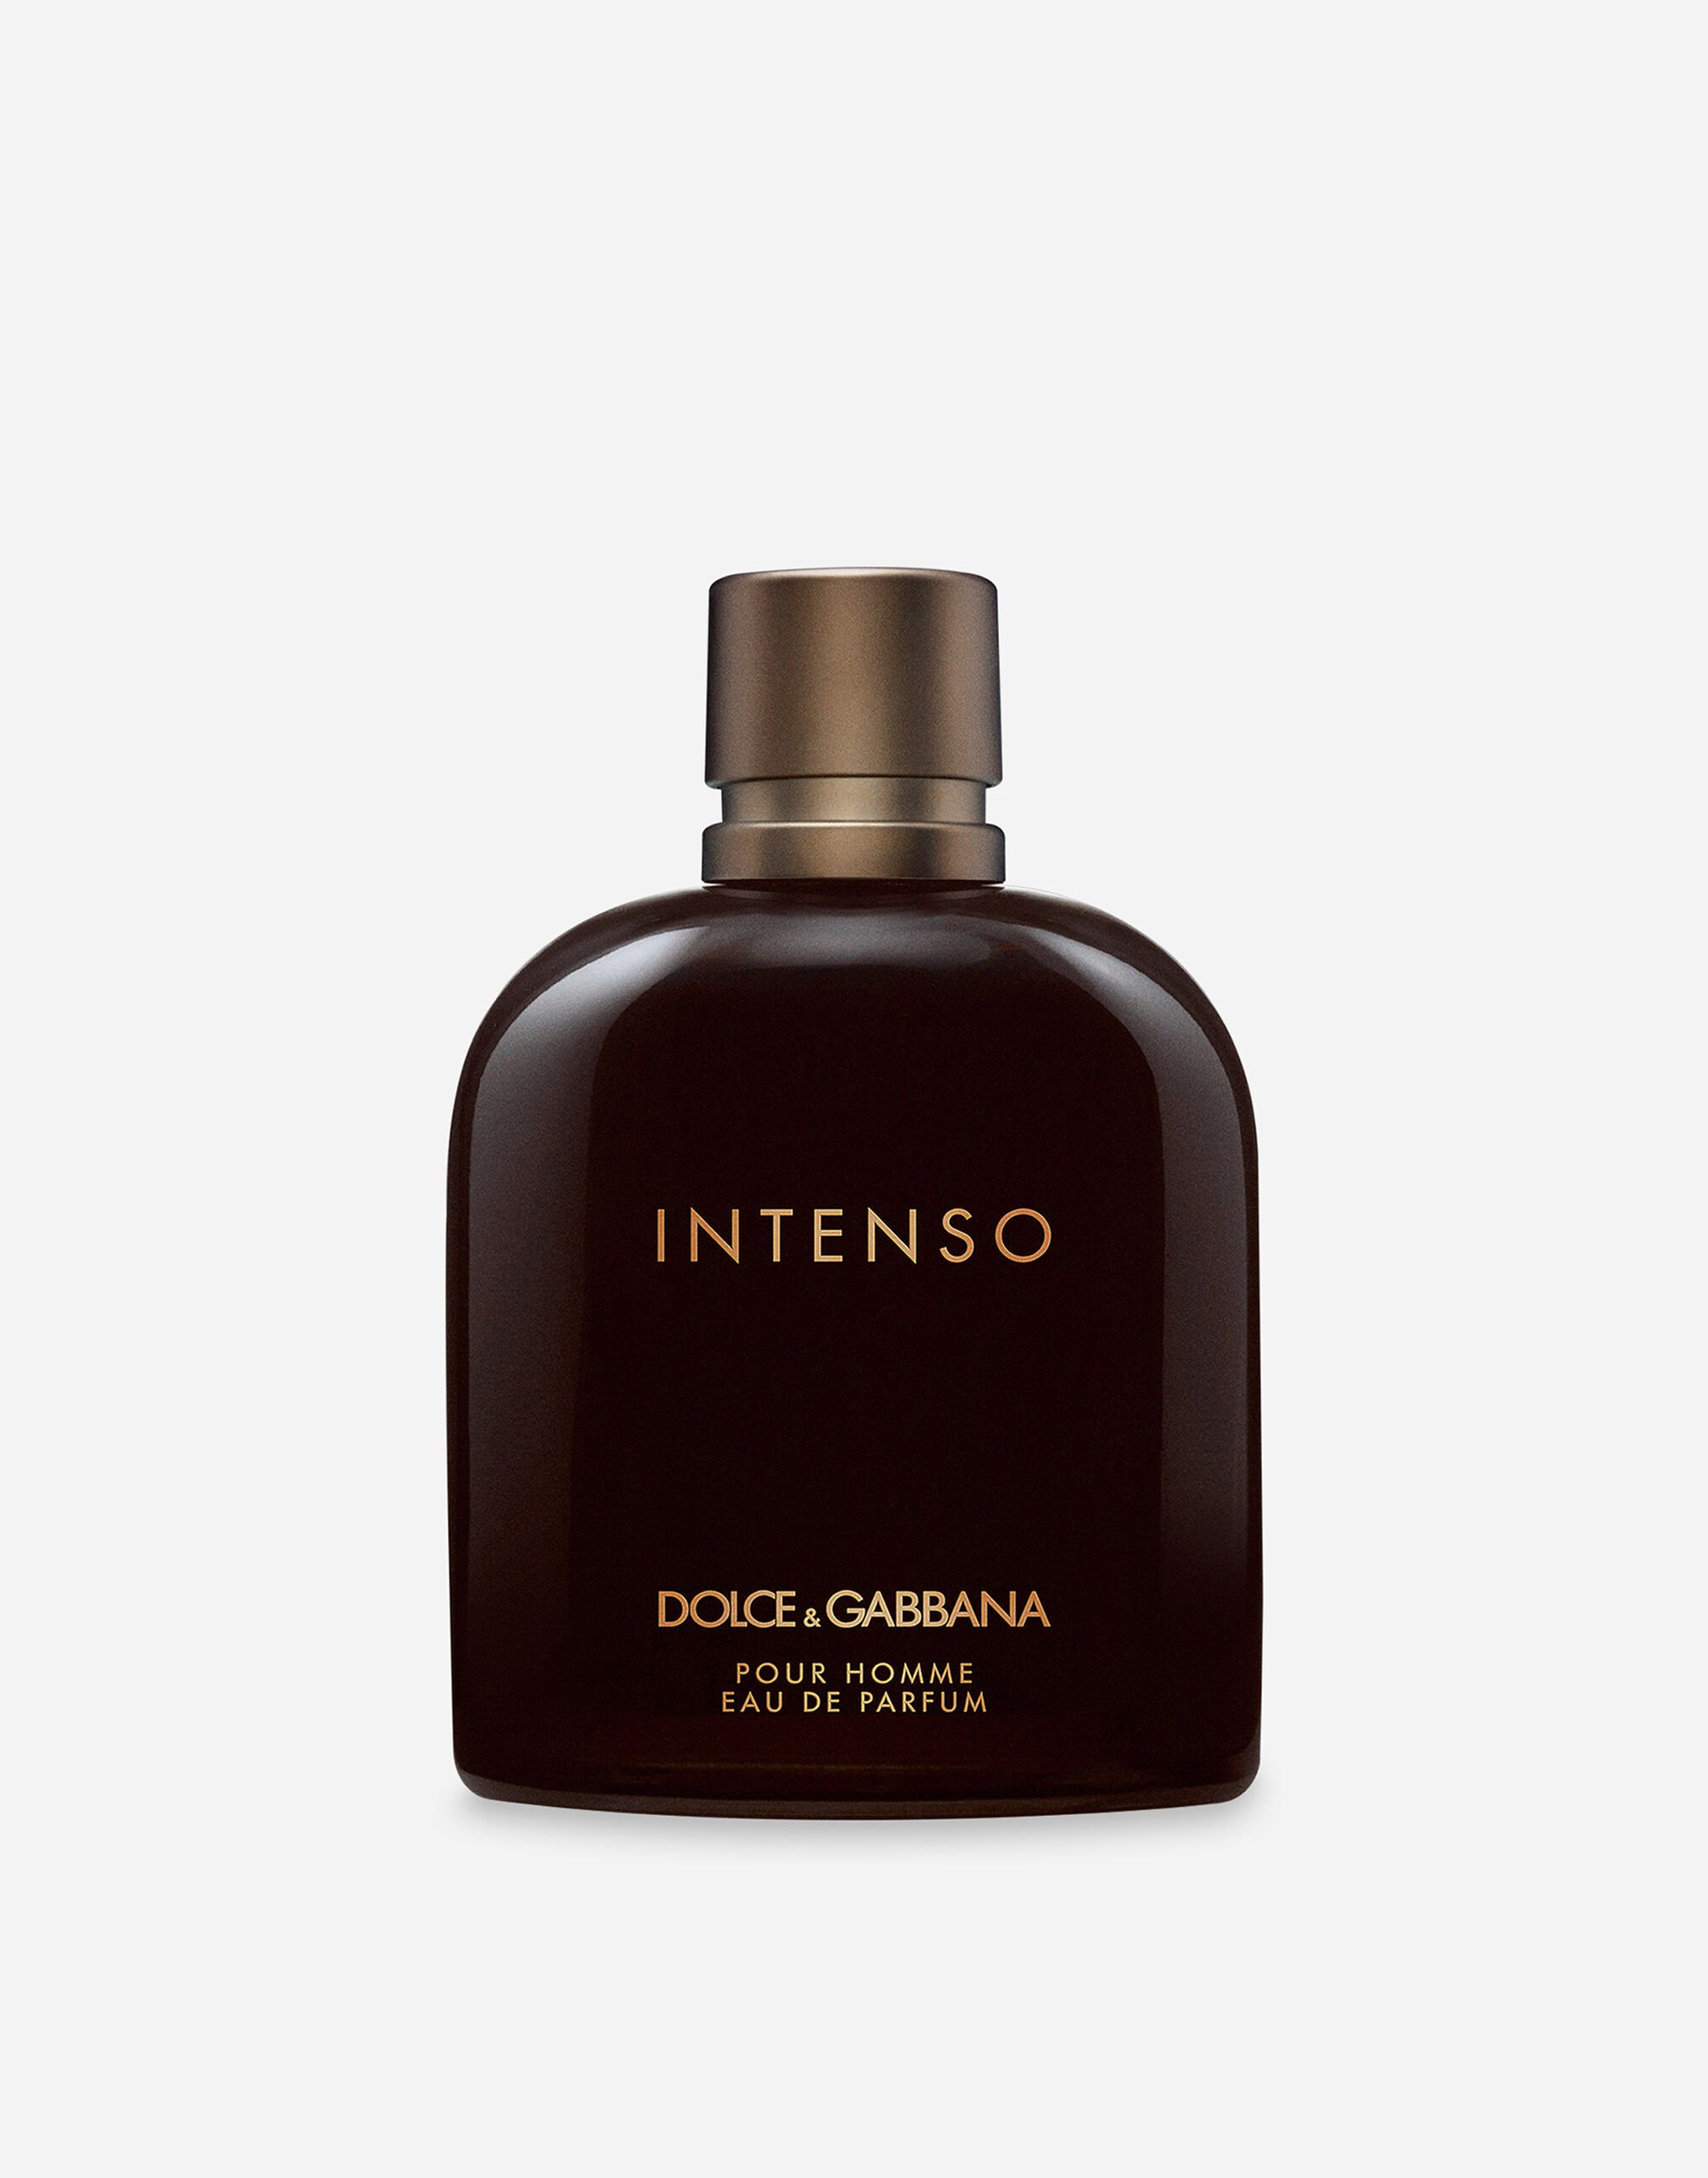 Dolce & Gabbana Intenso Eau de Parfum - VT0063VT000